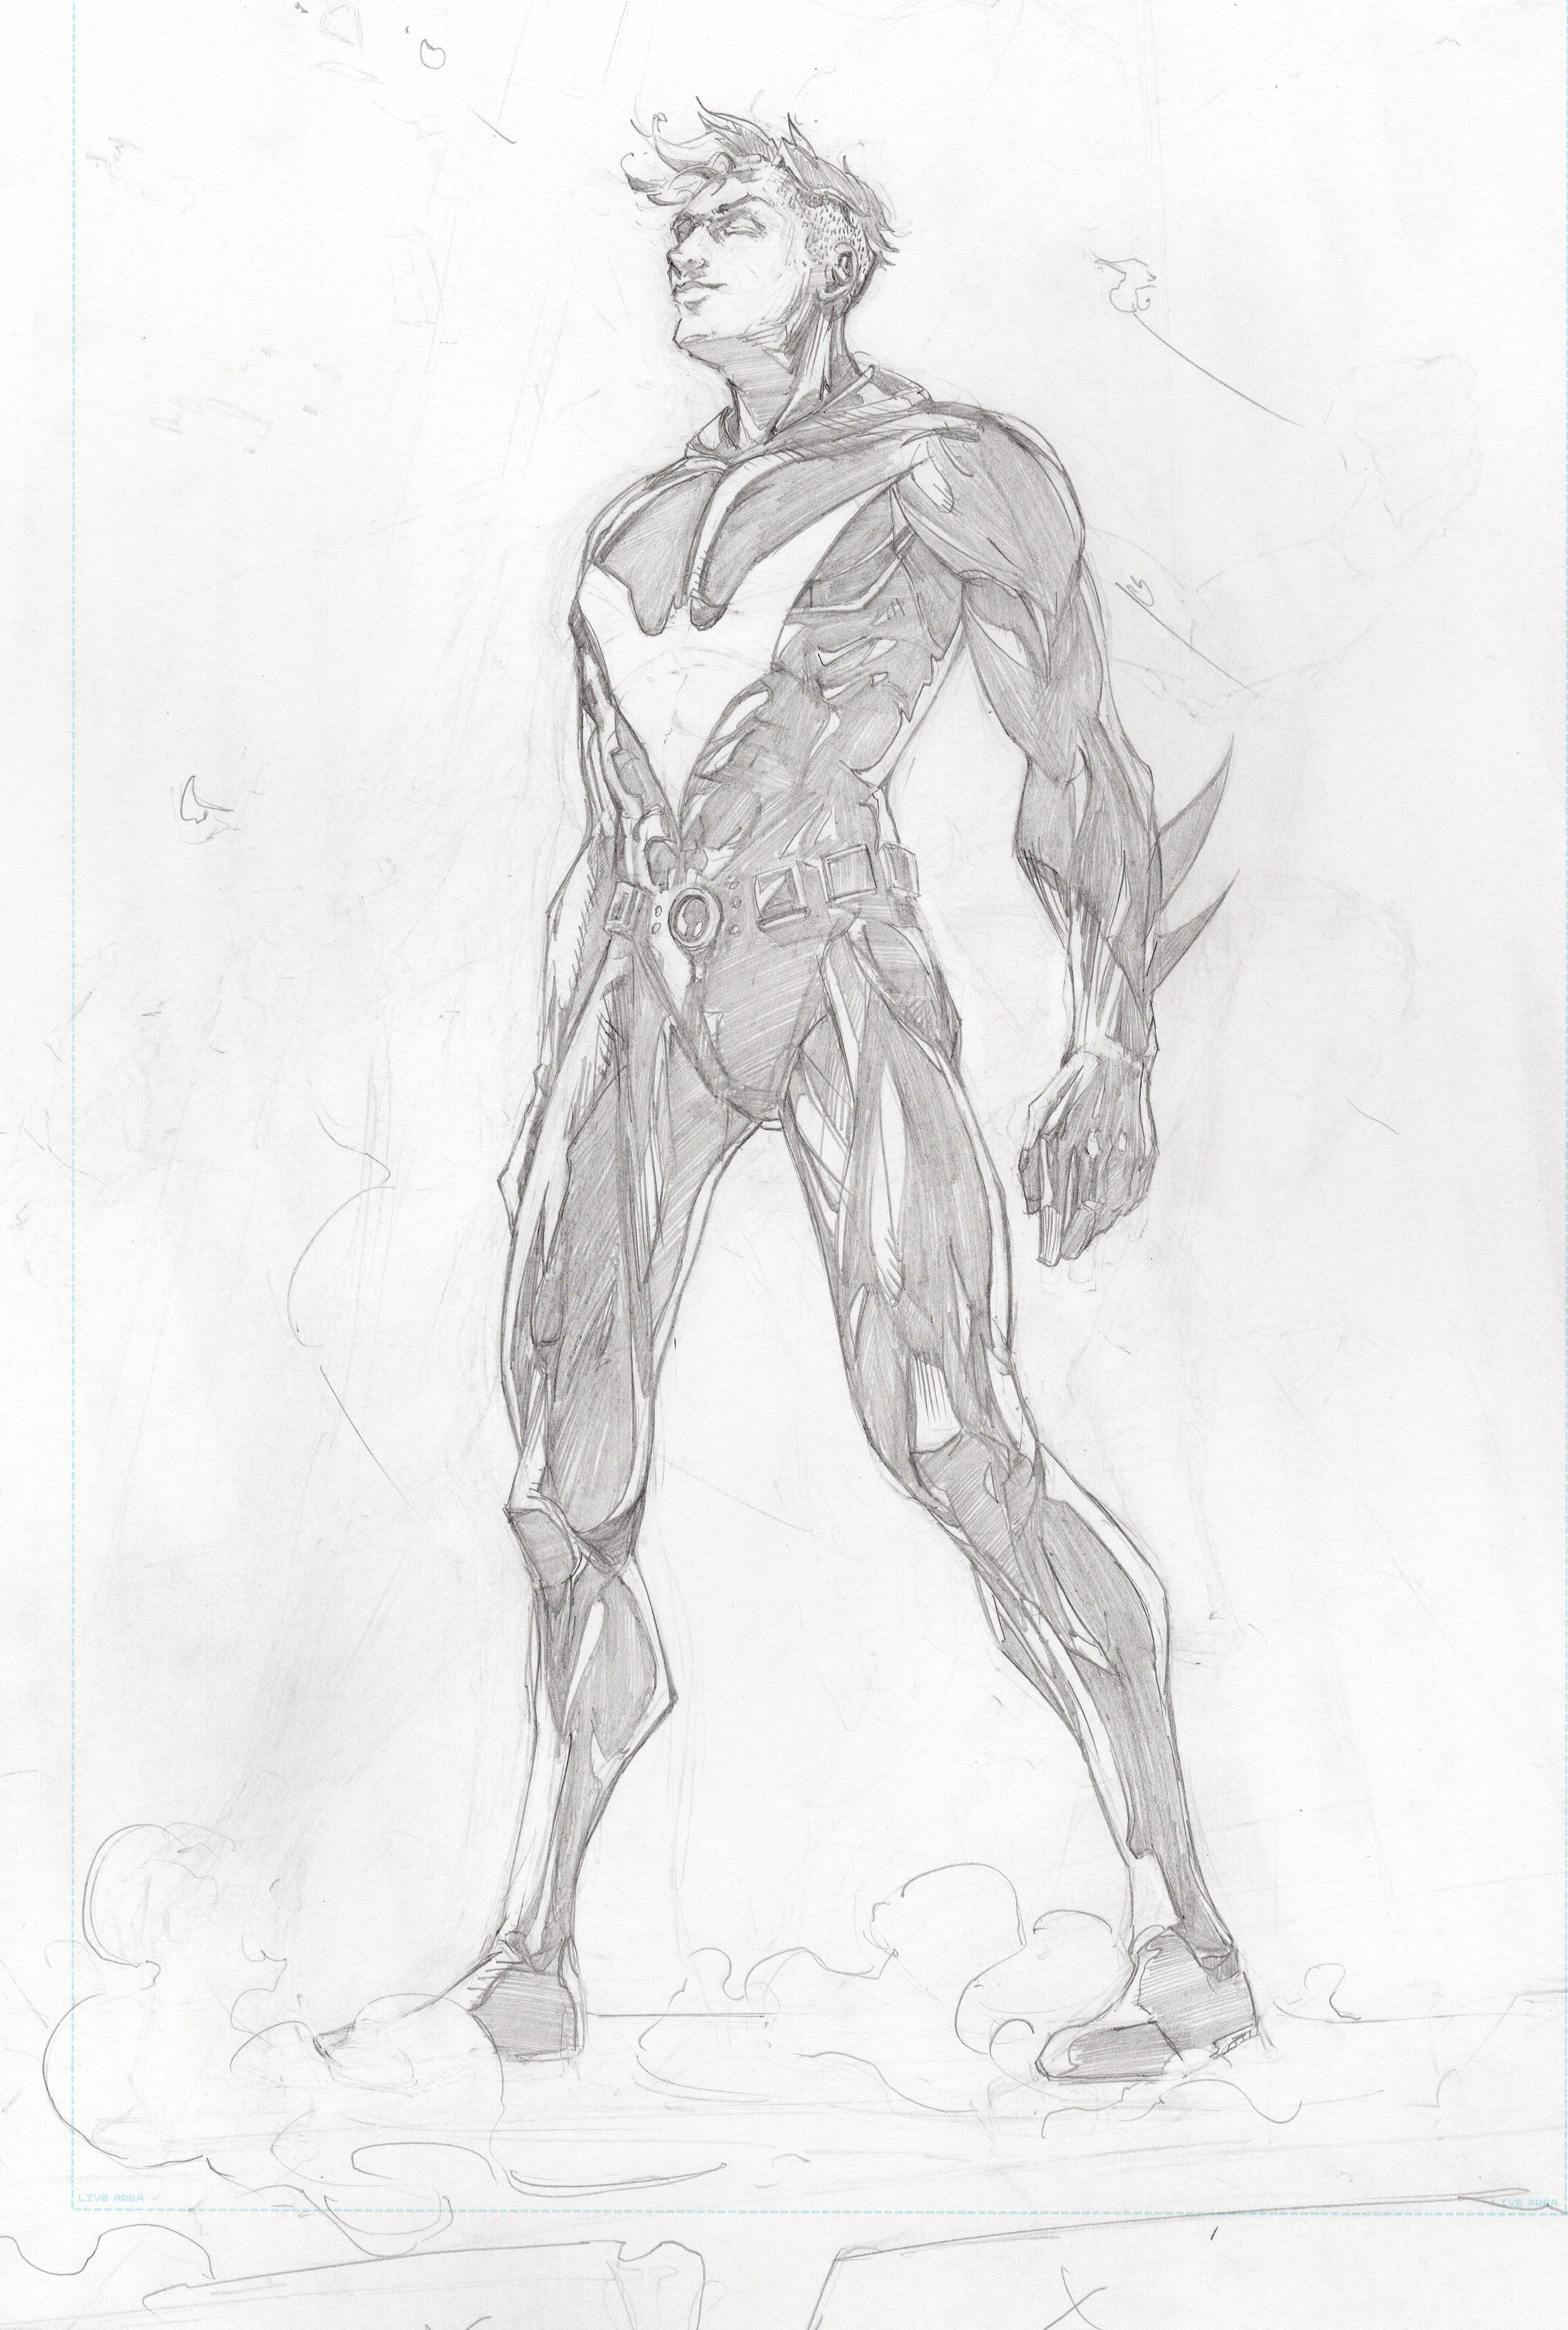 sketch of flash man from DC superhero